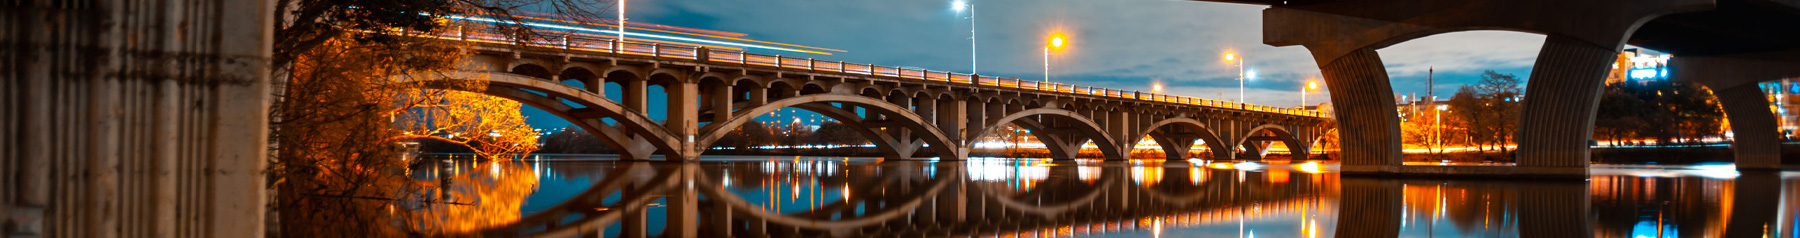 San Antonio - Lamar Pedestrian Bridge